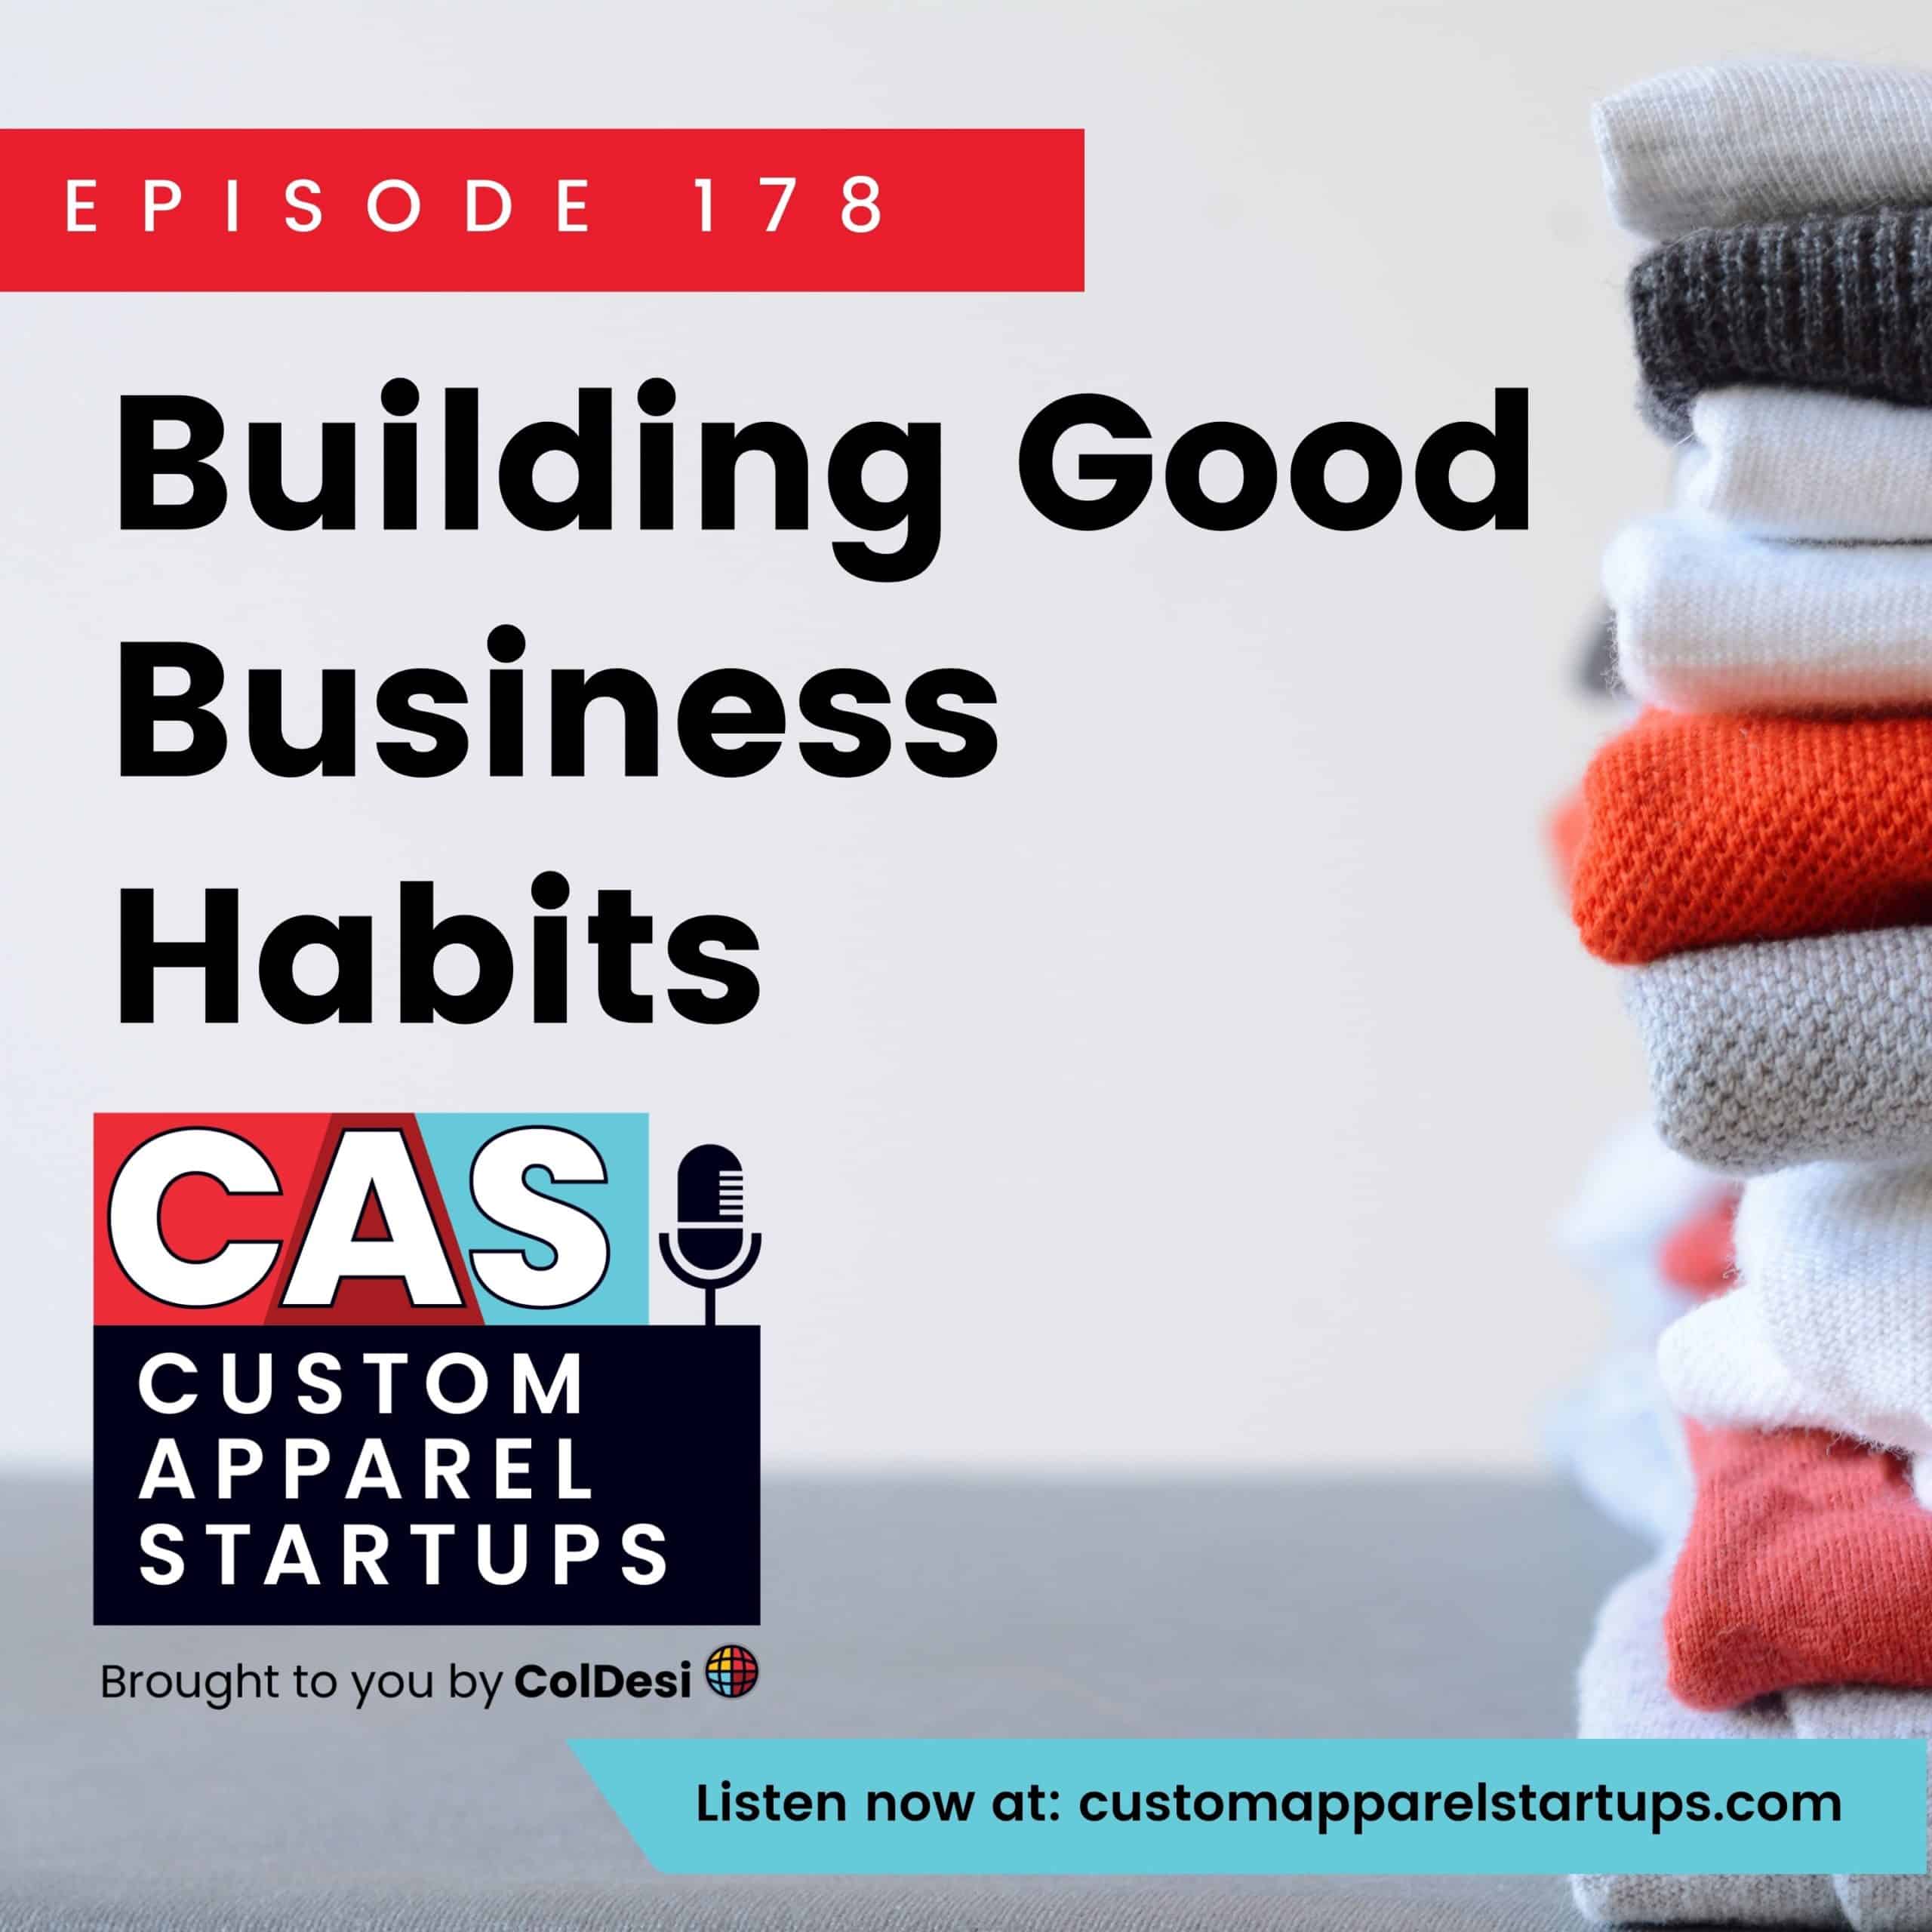 Episode 178 - Building Good Business Habits